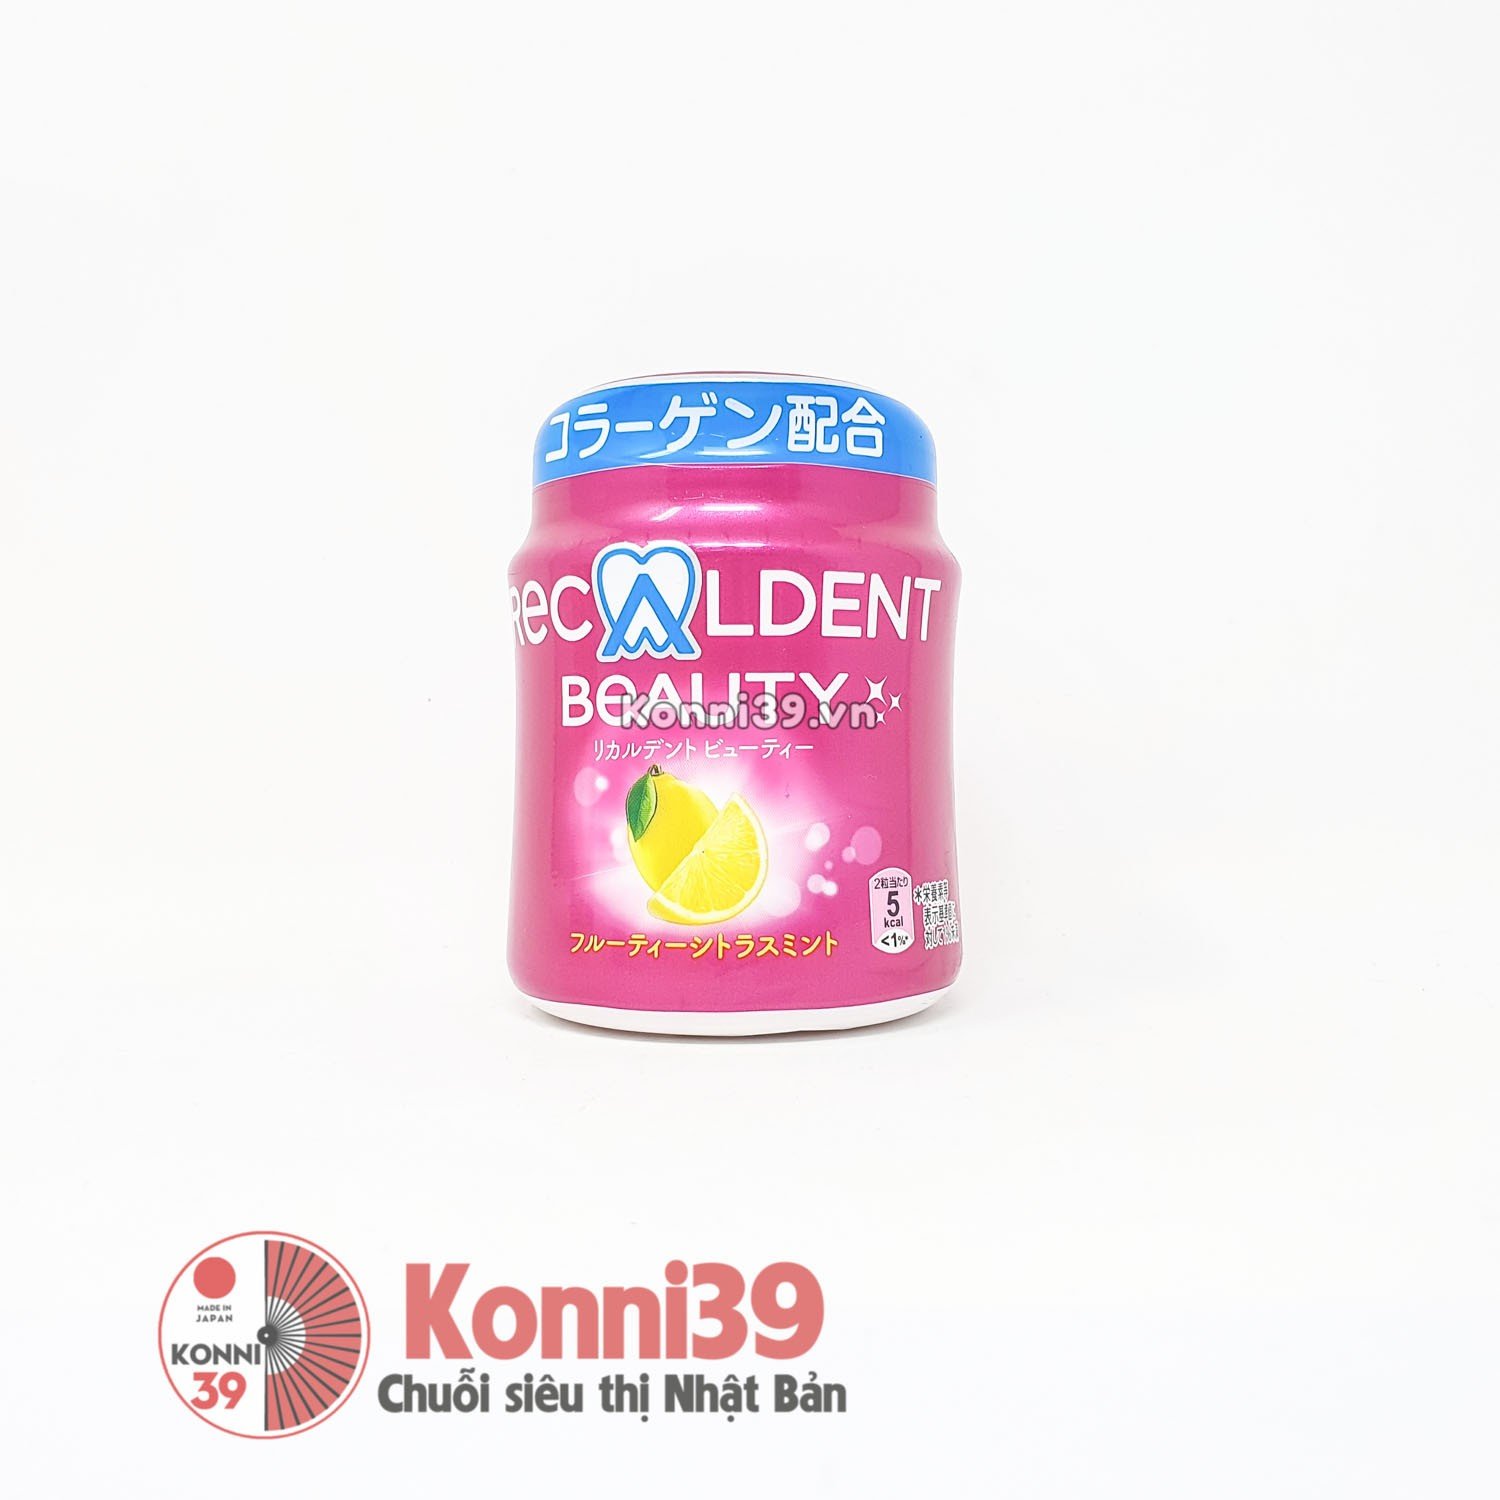 Kẹo cao su Recaldent Beauty chứa collagen 132g